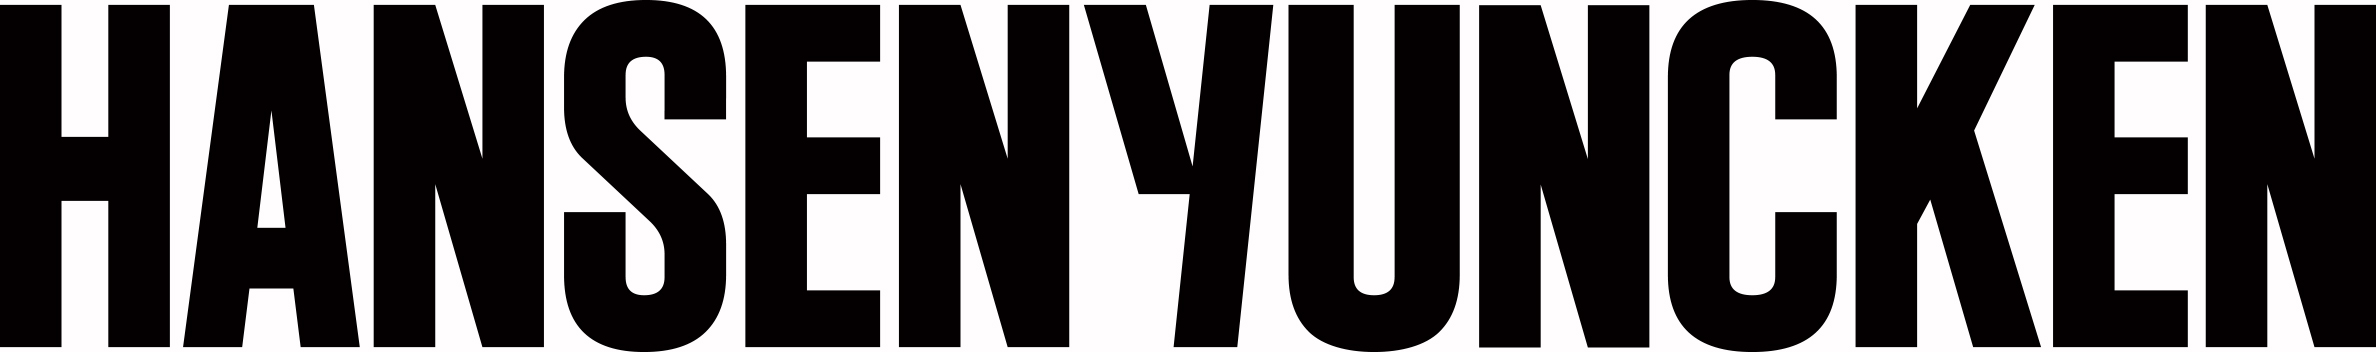 hy-logo-2019